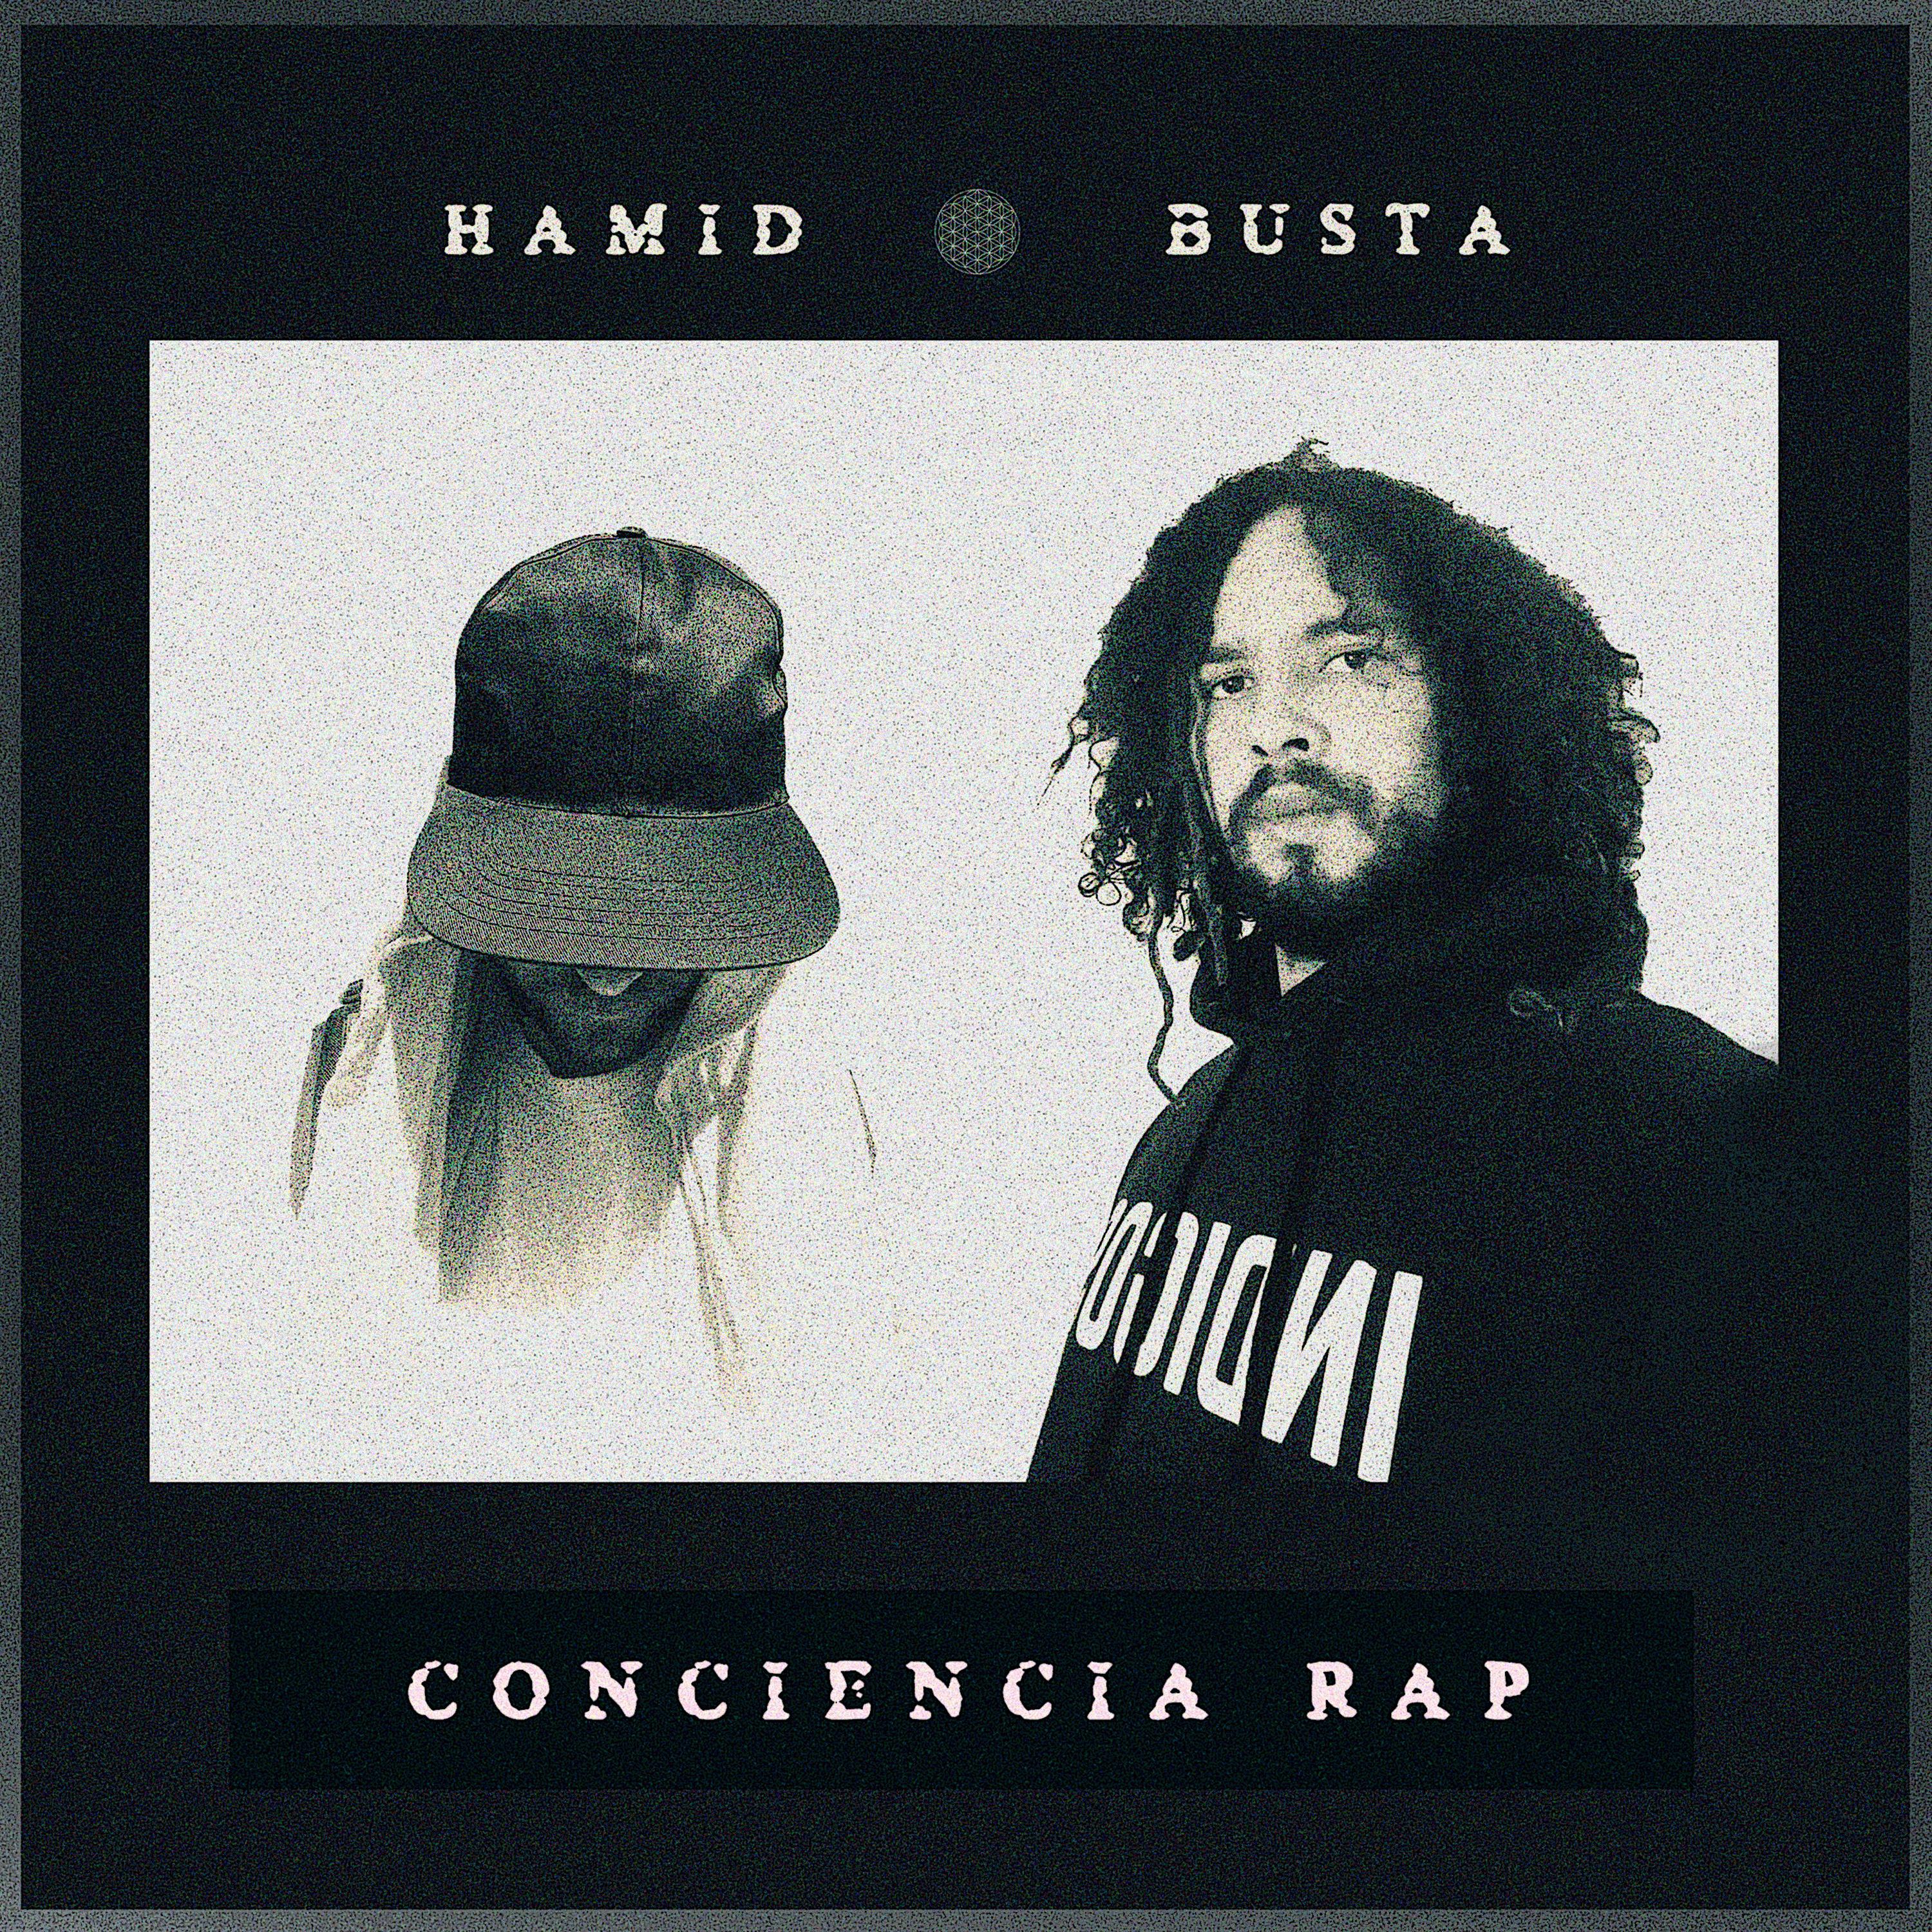 Hamid - Conciencia Rap (feat. Busta & Dj Can)